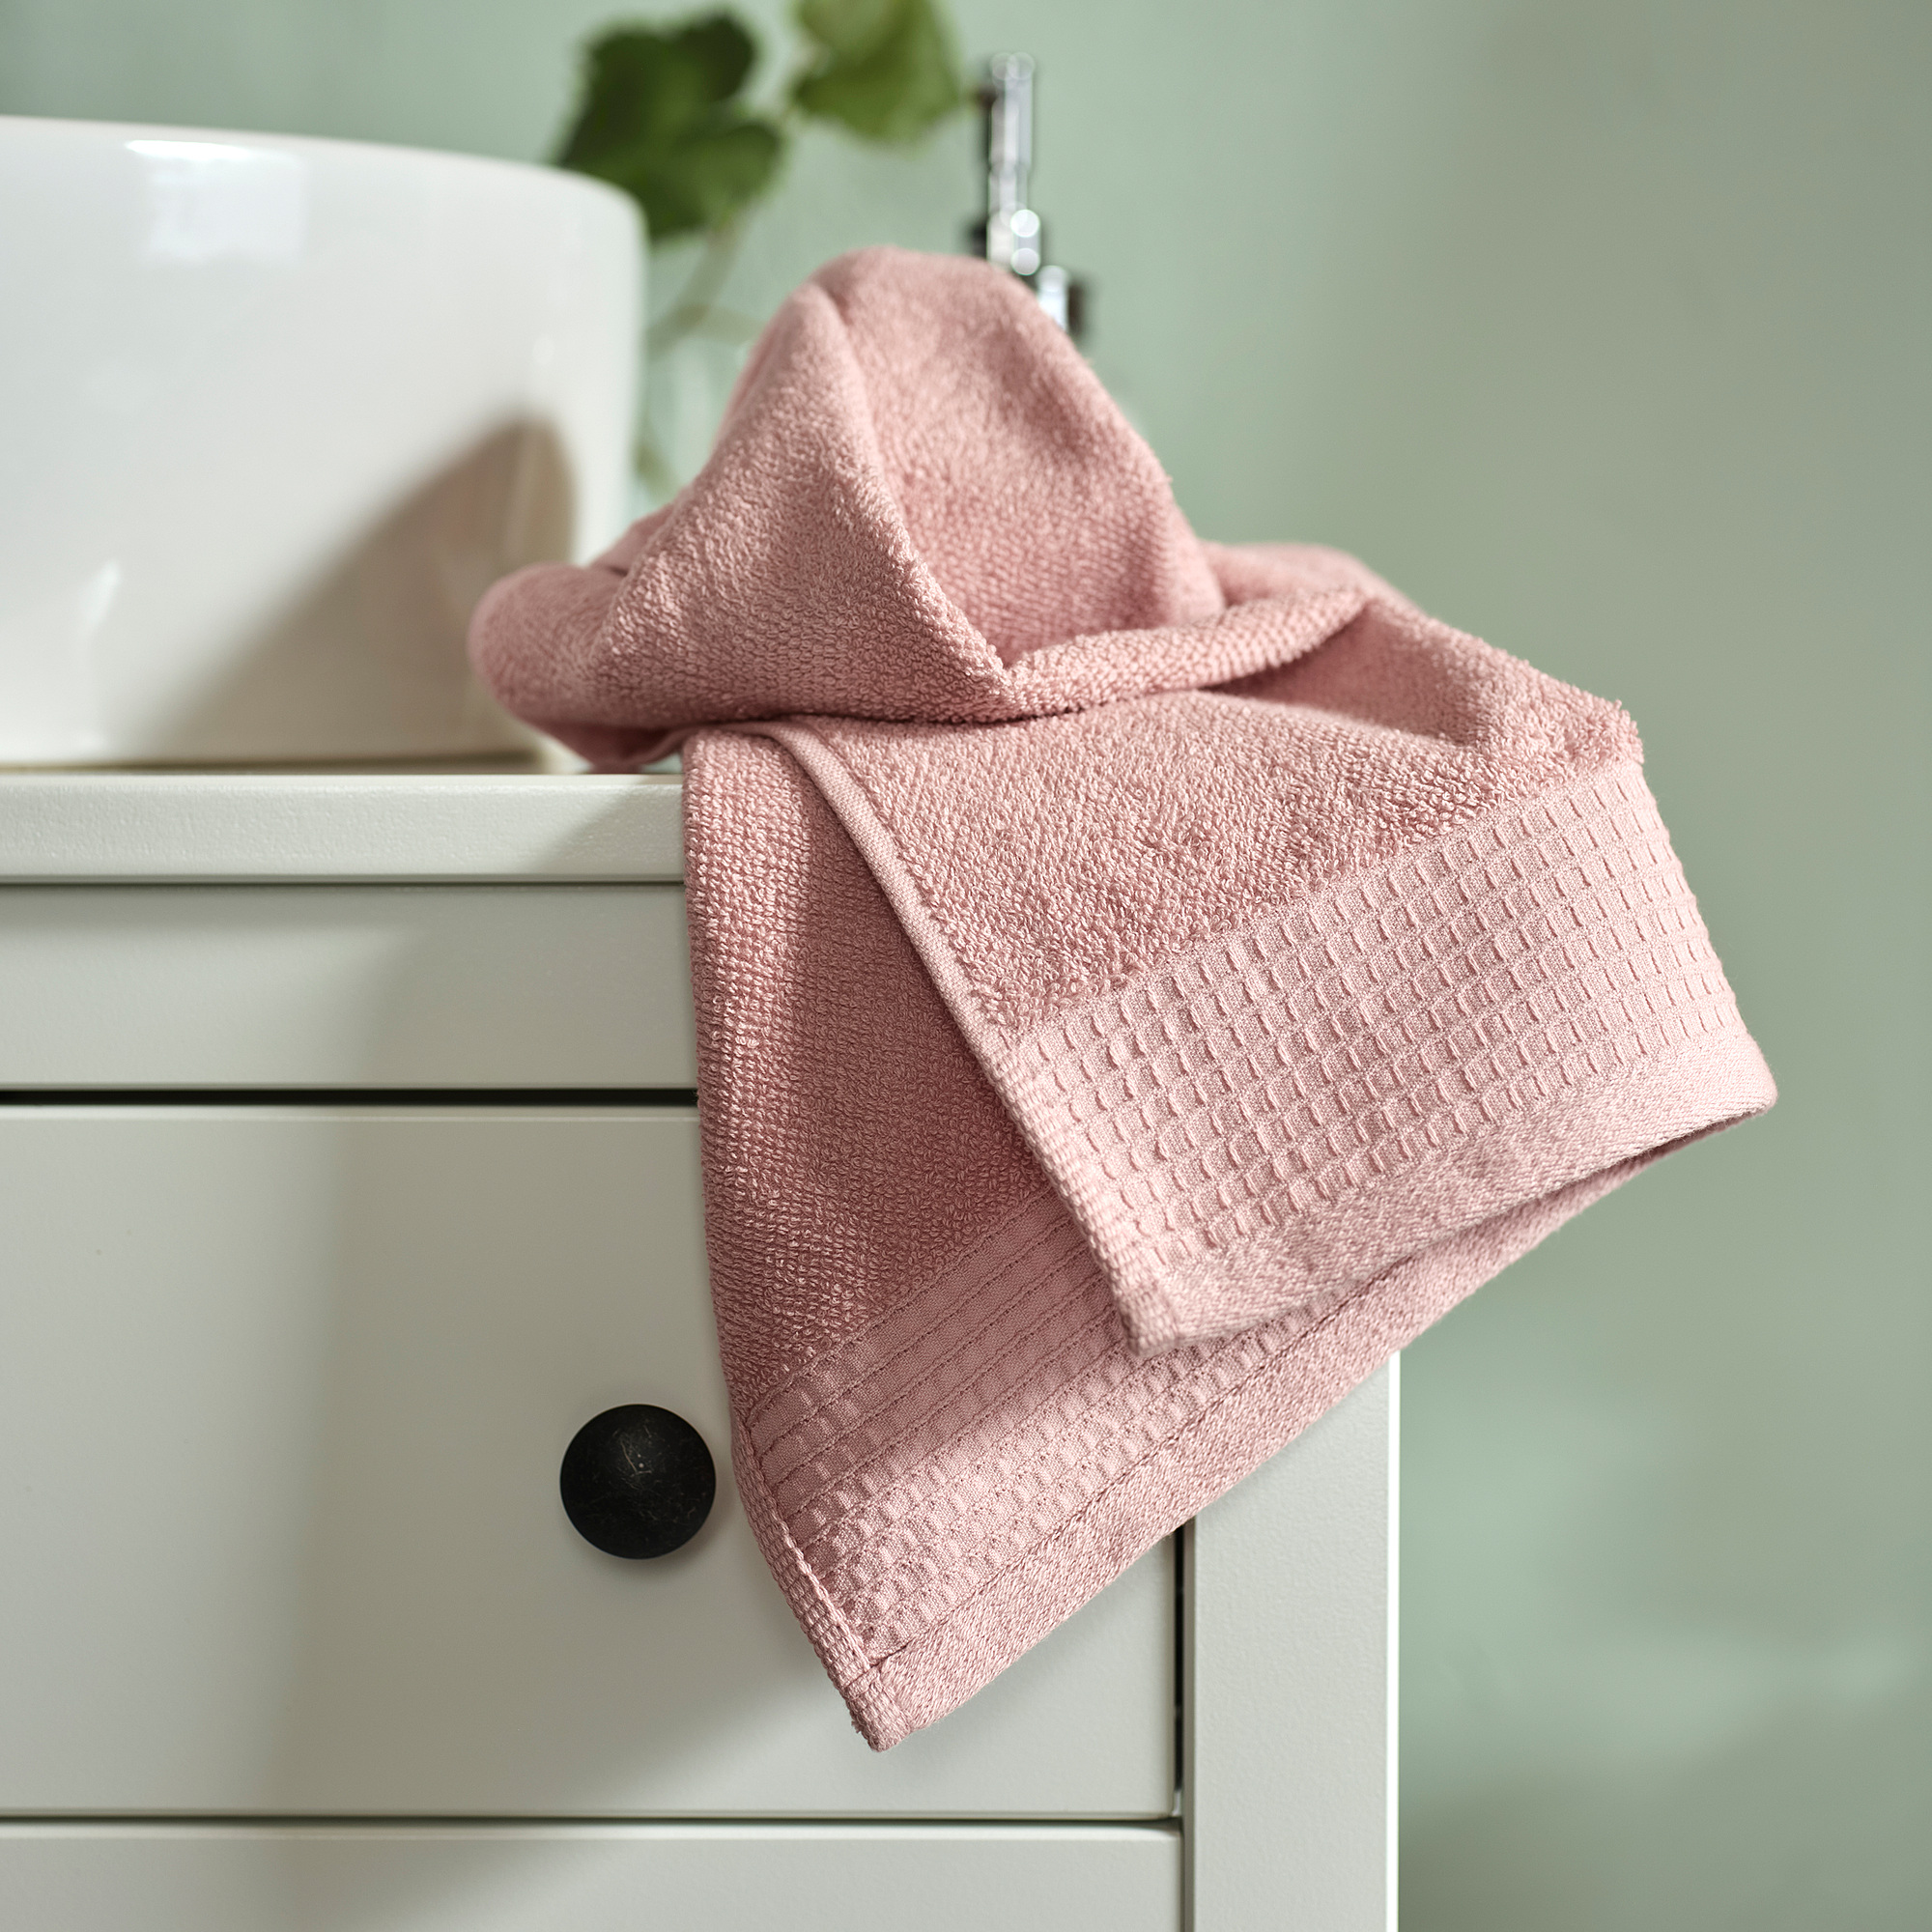 VINARN bath towel